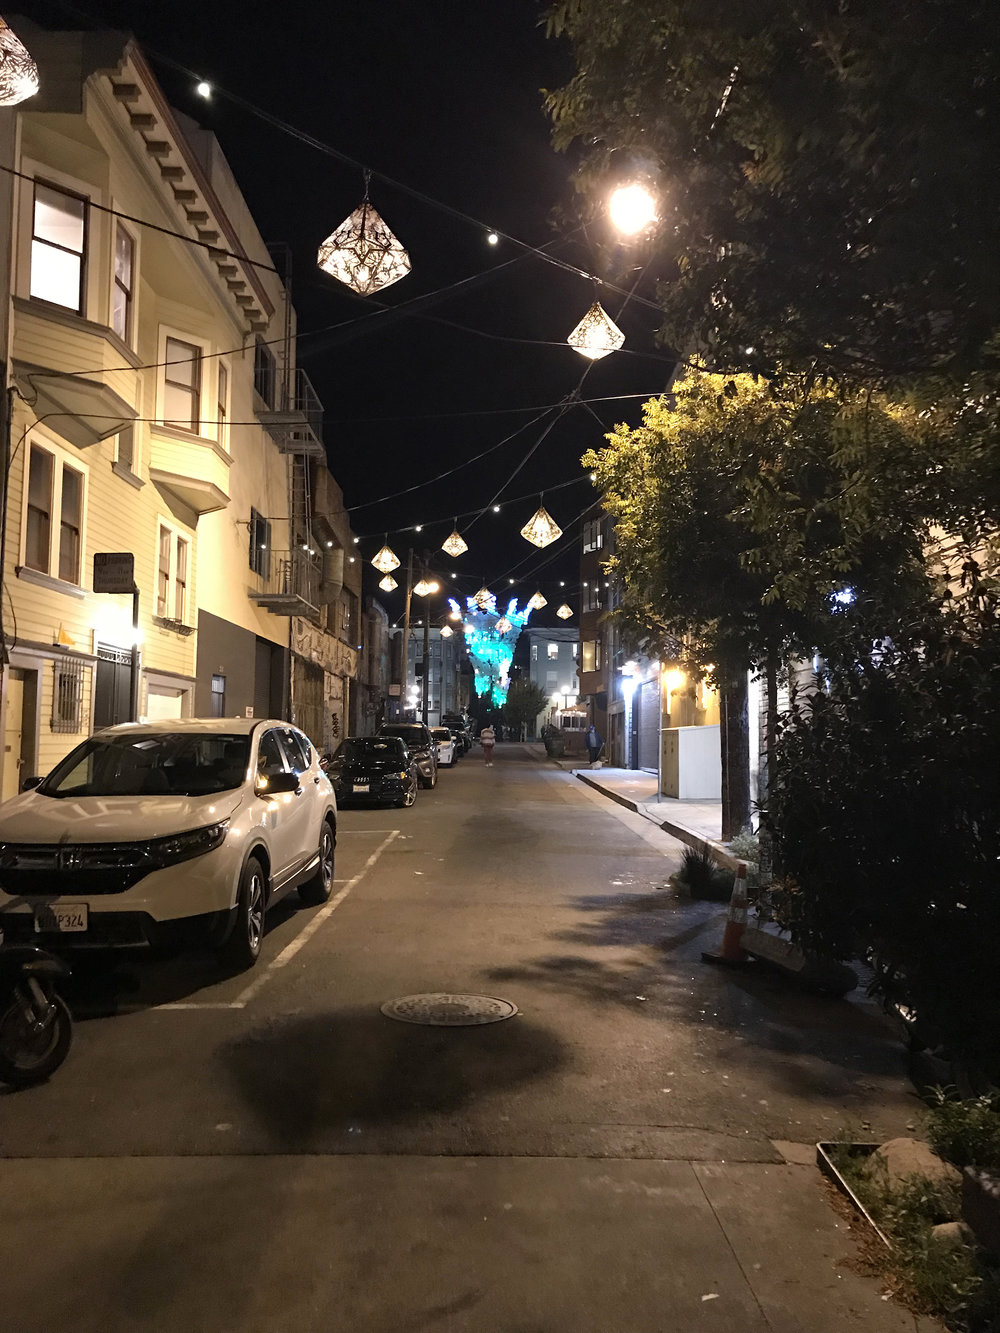  The new hanging lanterns light up Linden Alley after dark 